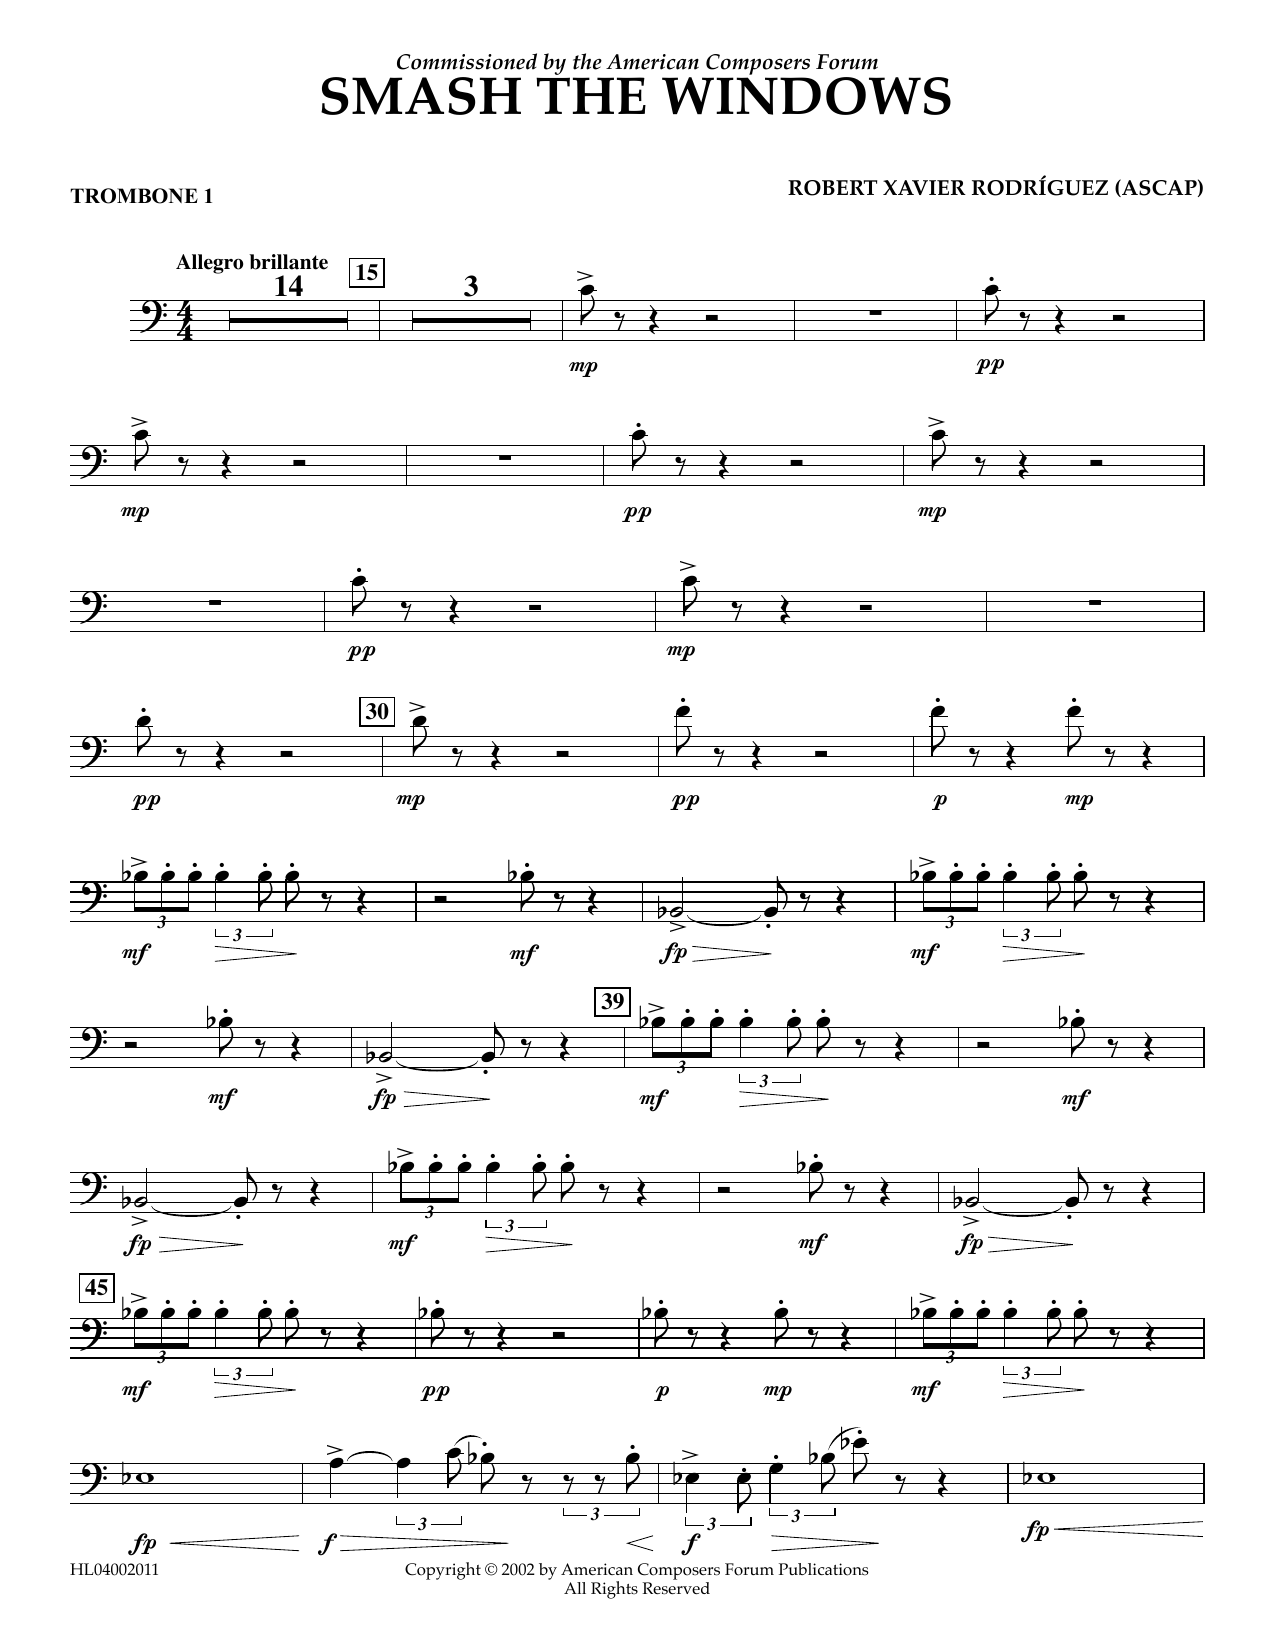 Robert Xavier Rodríguez Smash the Windows - Trombone 1 Sheet Music Notes & Chords for Concert Band - Download or Print PDF